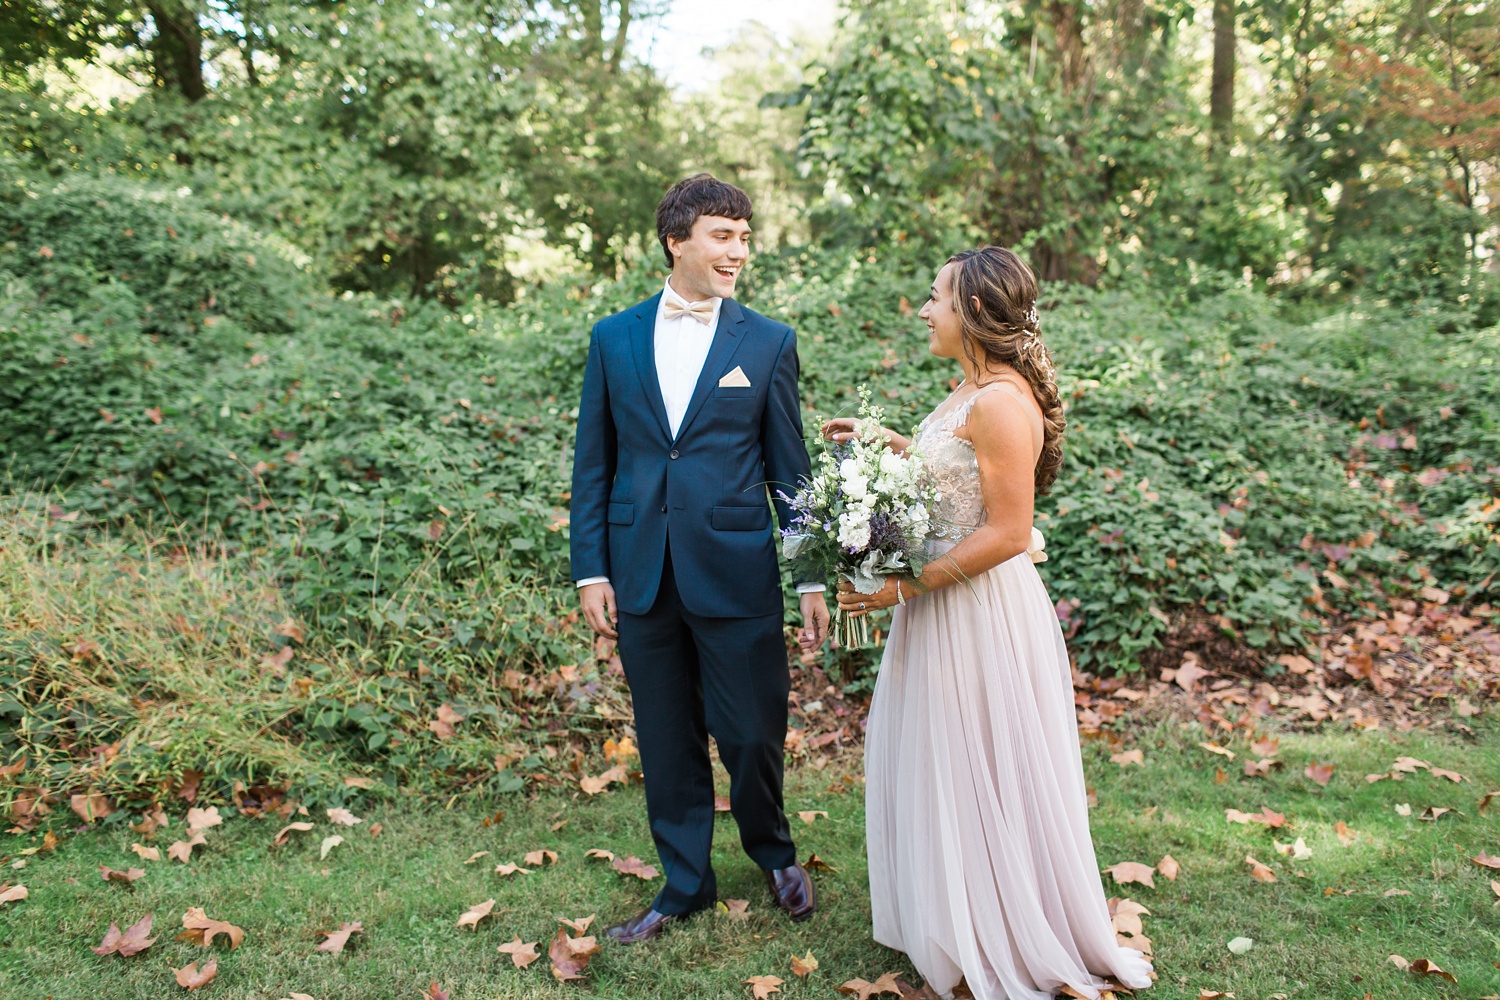 Glen Foerd Mansion Wedding Photography | Philadelphia Wedding Photographer | Yolanda and Michael